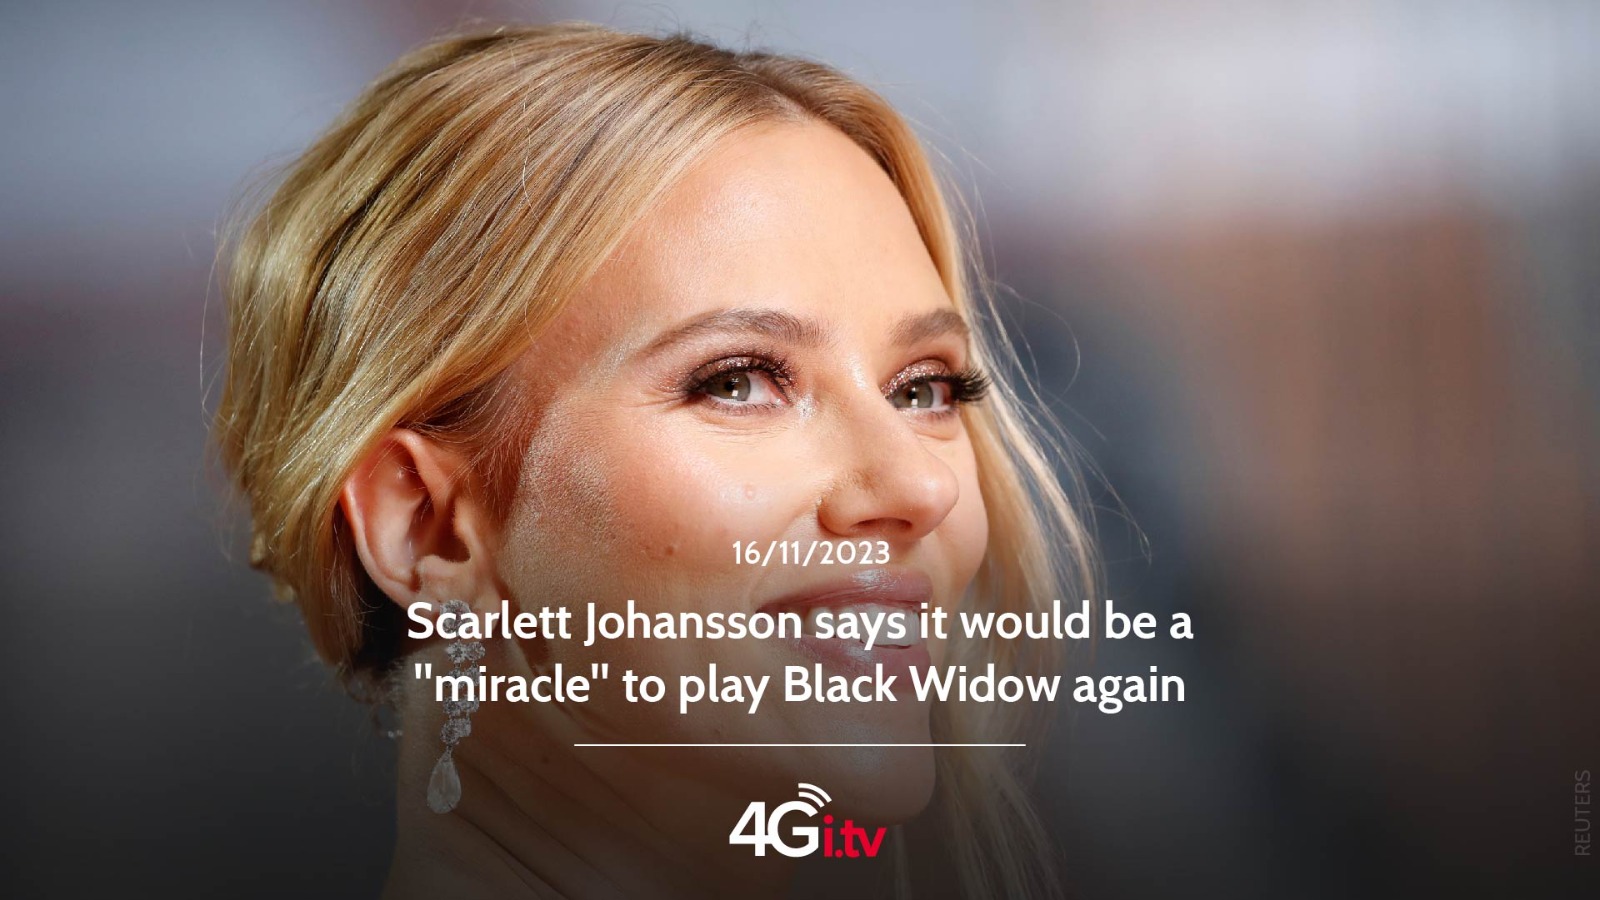 Lesen Sie mehr über den Artikel Scarlett Johansson says it would be a “miracle” to play Black Widow again